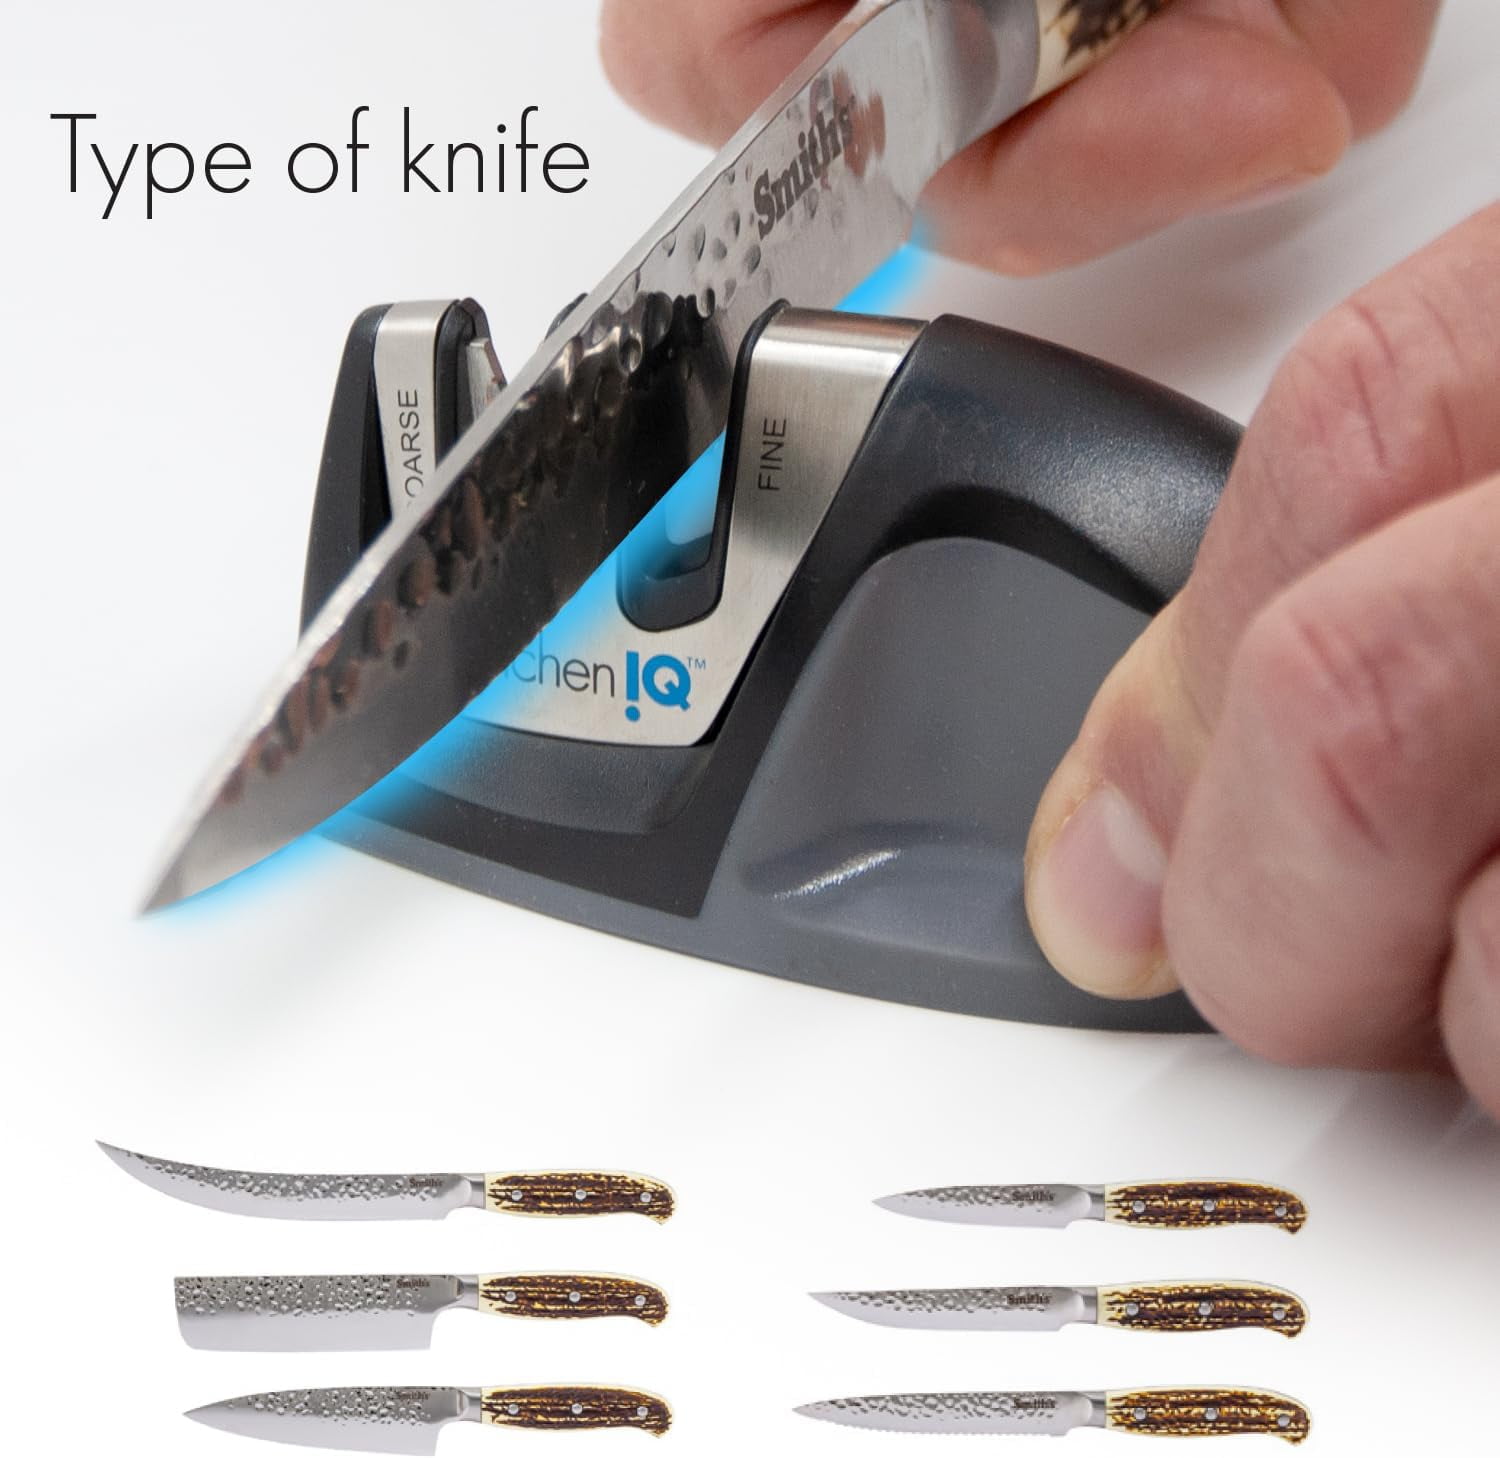 KitchenIQ 50009 Edge Grip 2-Stage Knife Sharpener, Black, Coarse & Fine Sharpeners, Compact for Easy Storage, Stable Non-Slip Base, Soft Grip Rubber